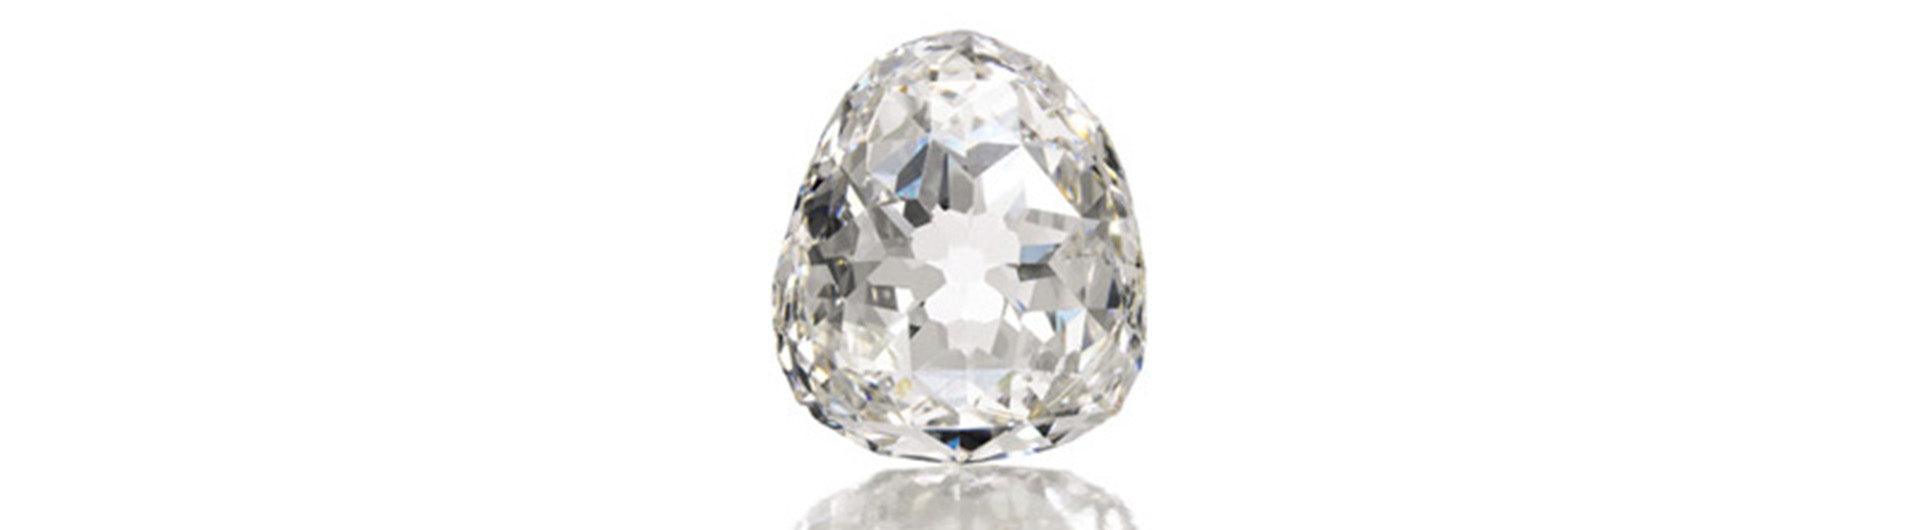 Most Expensive Diamonds No.2 - The Sancy Diamond - Monroe Yorke Diamonds